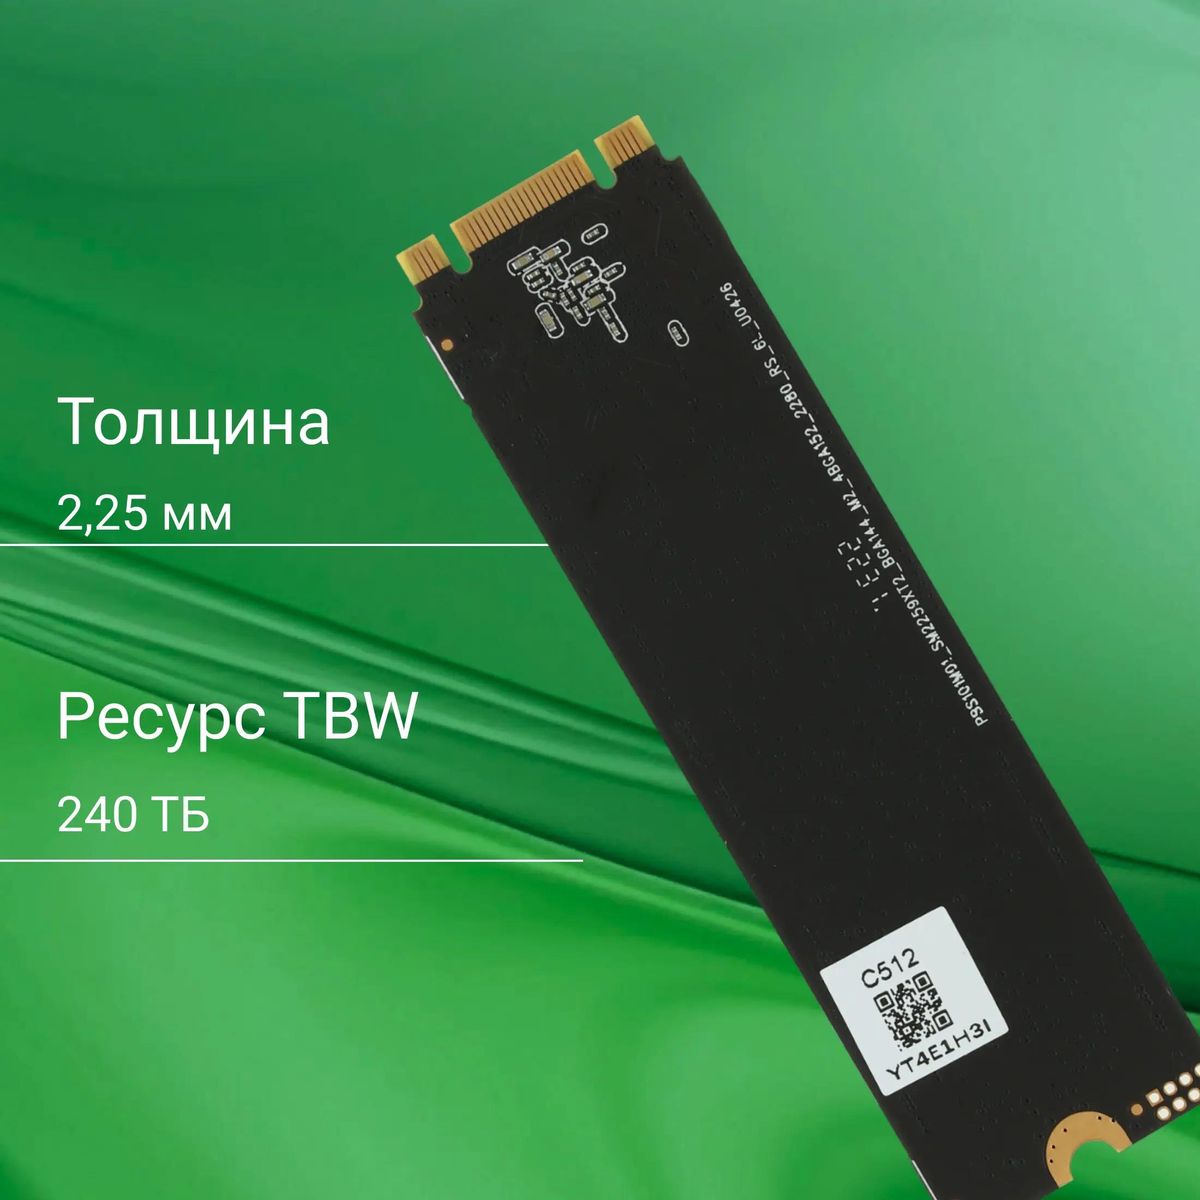 SSD накопитель Digma Run S9 DGSR1512GS93T 512ГБ